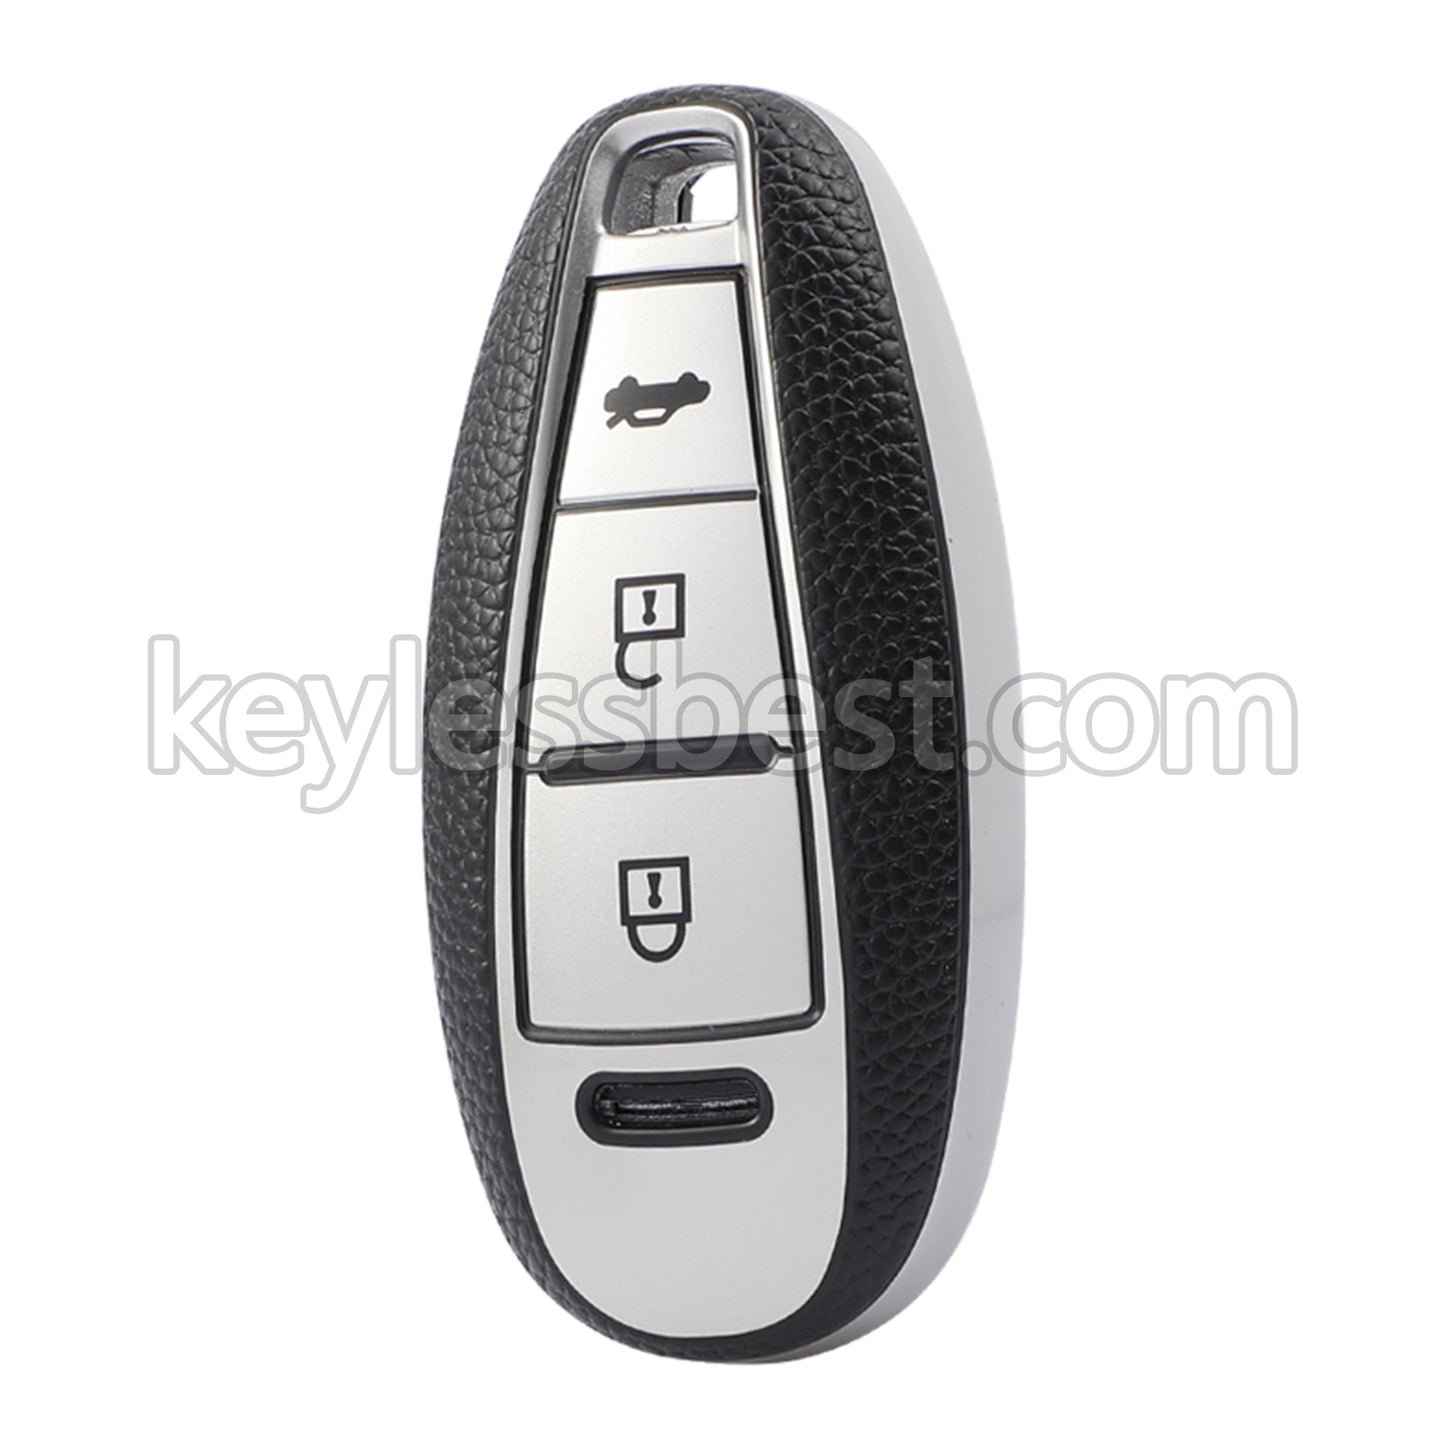 TPU Car Key cover For Suzuki Car Key cover case holder